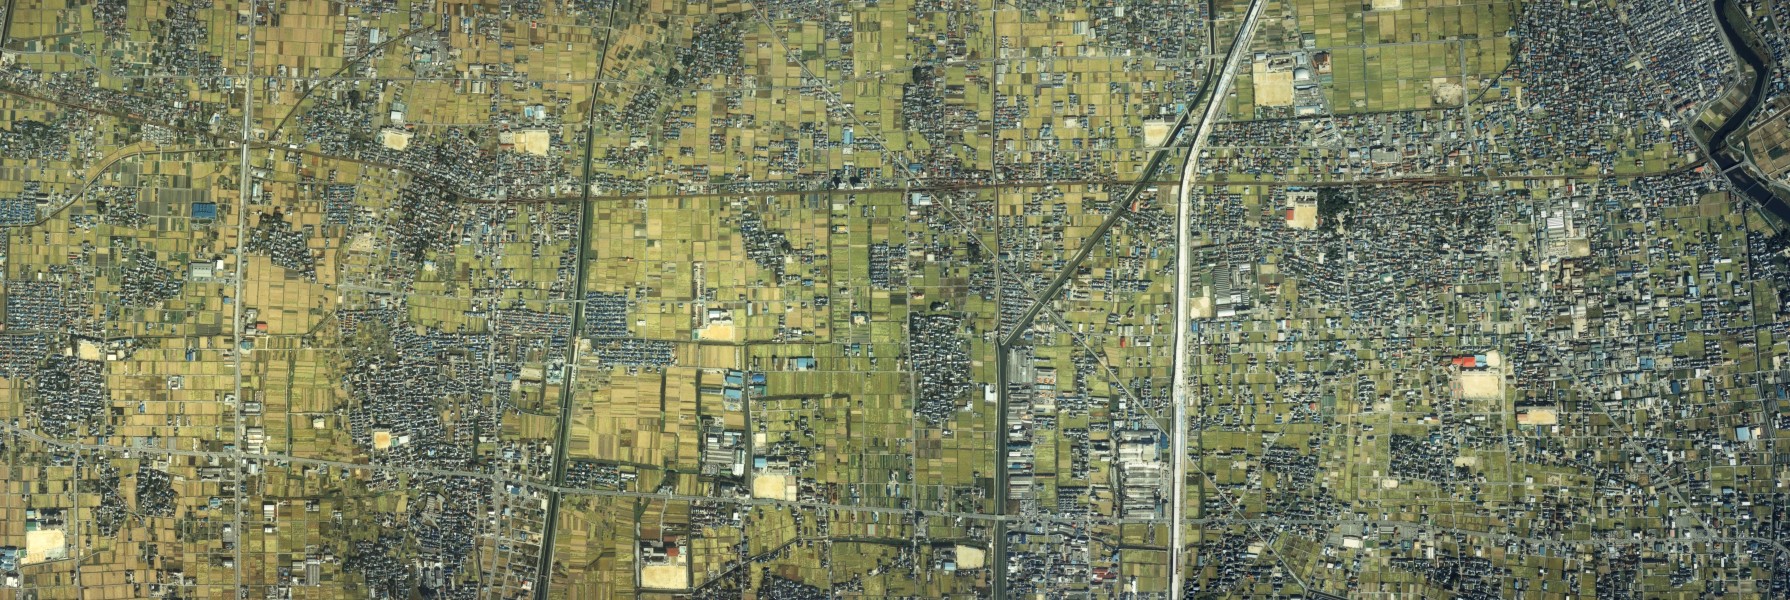 Ama city center area Aerial photograph.1987